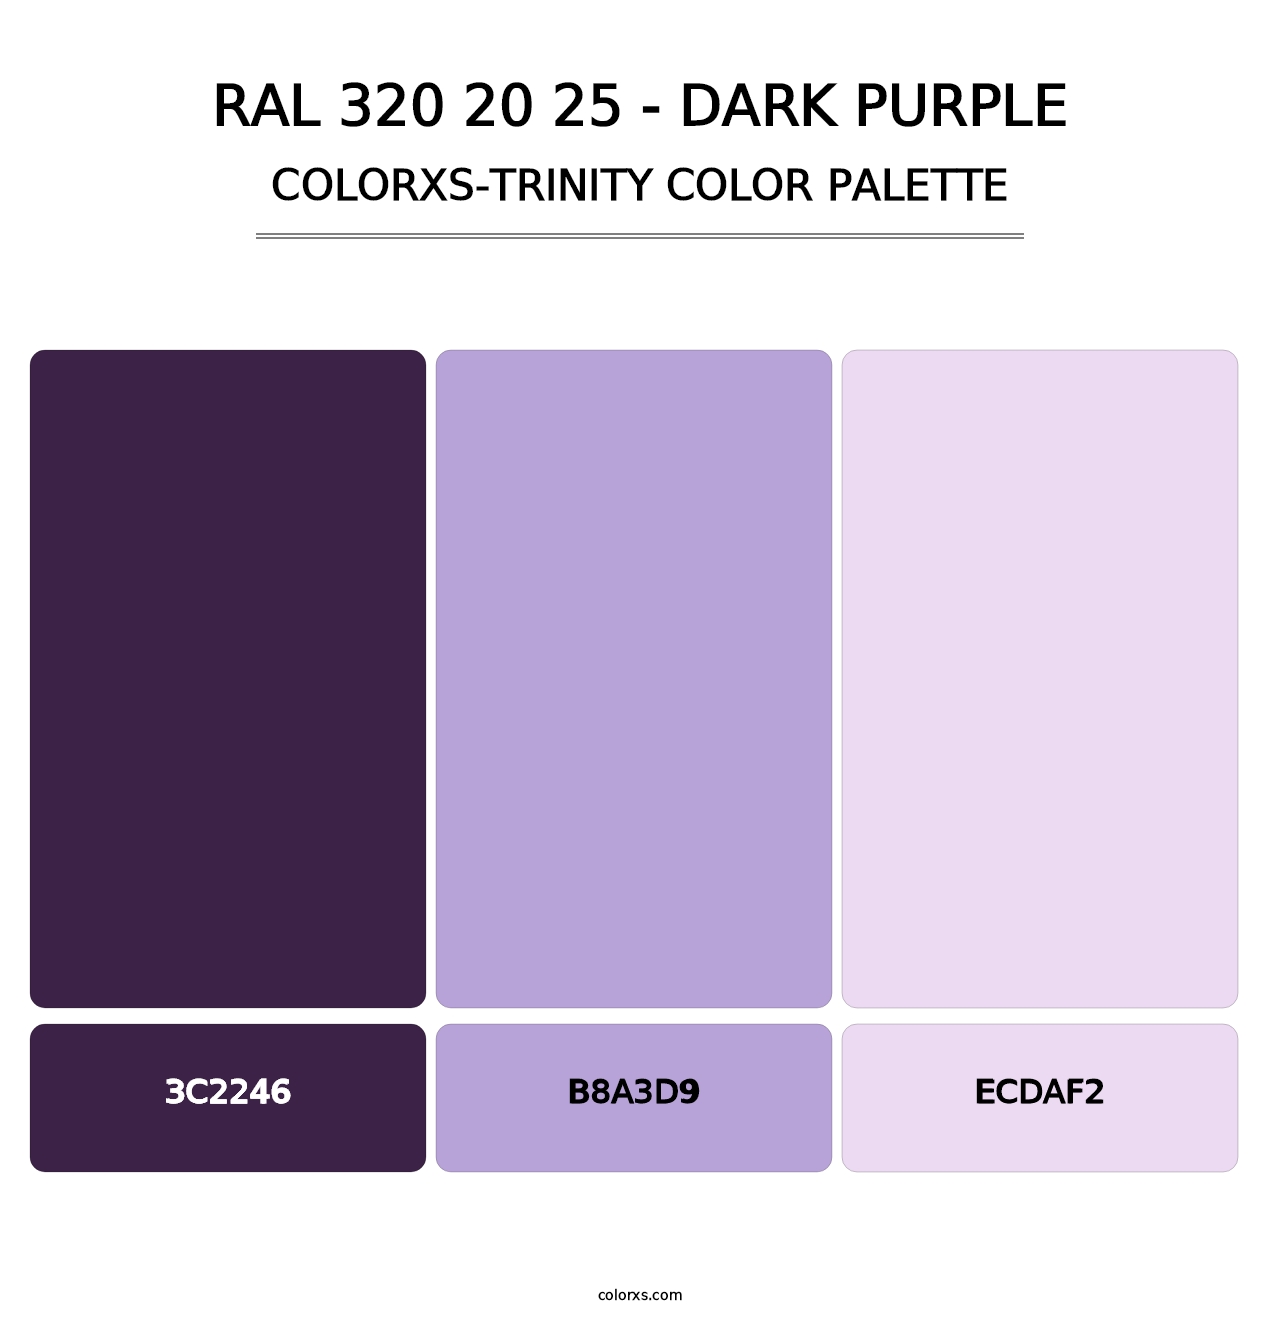 RAL 320 20 25 - Dark Purple - Colorxs Trinity Palette